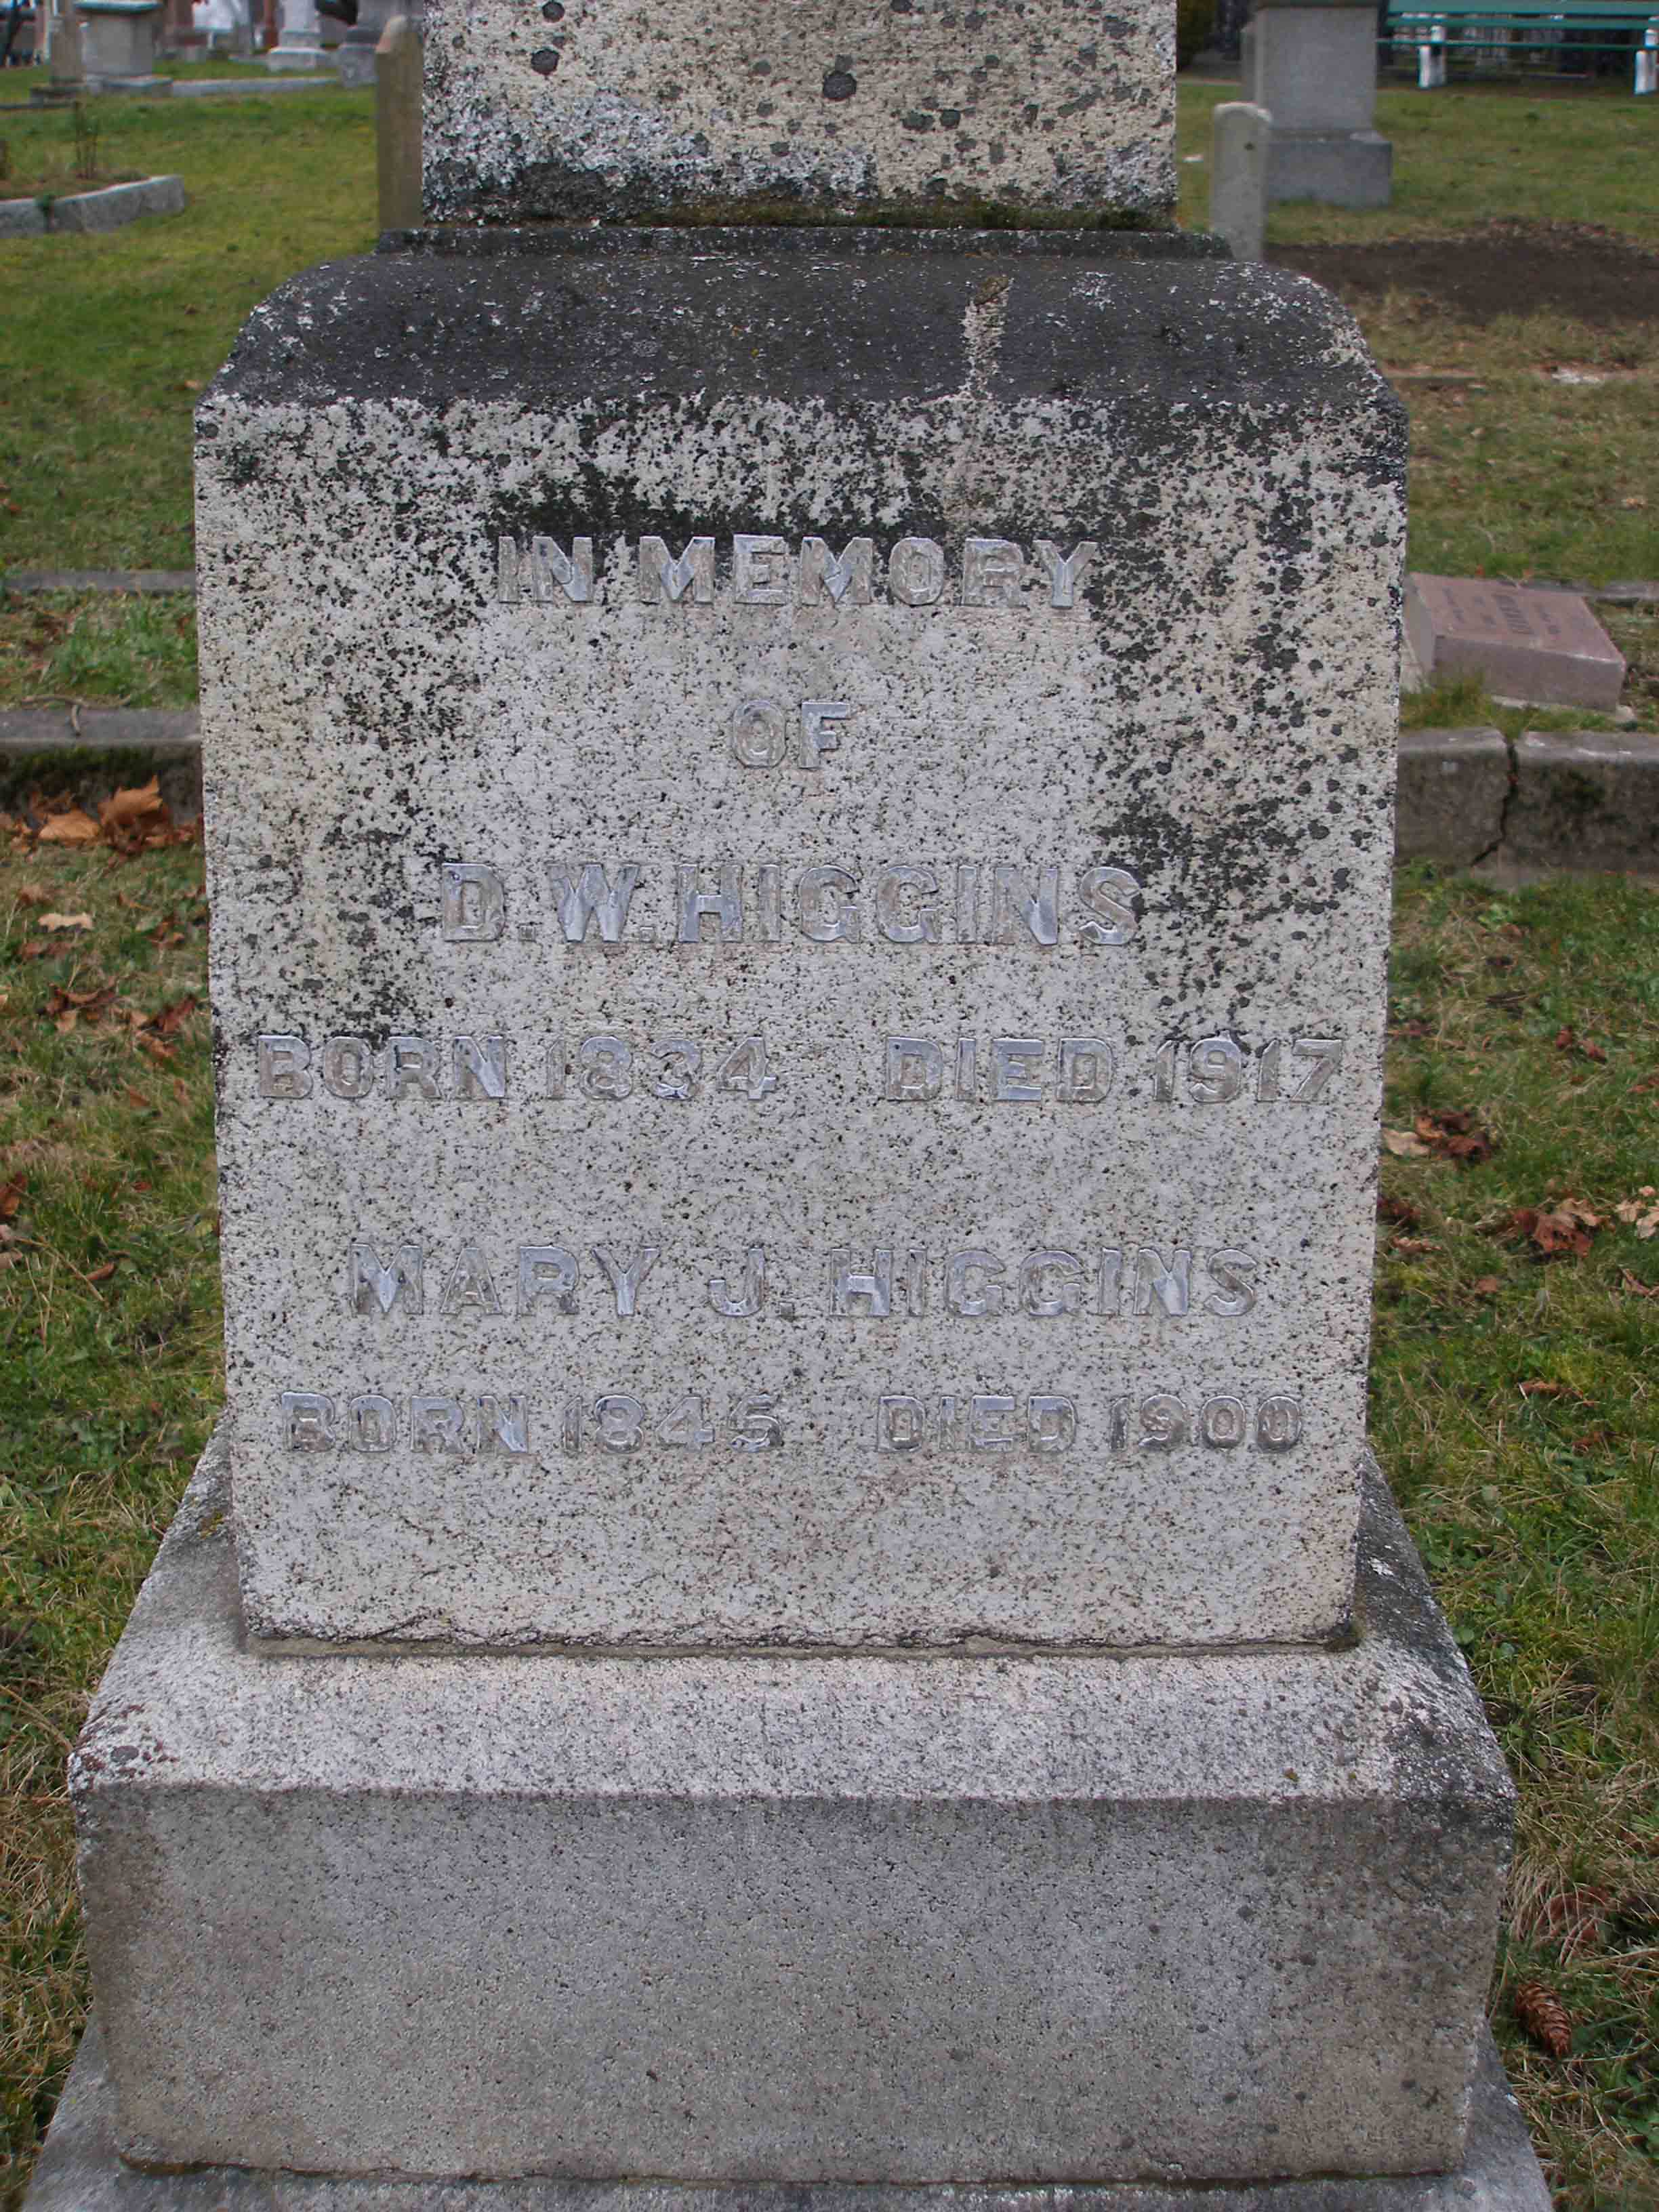 David William Higgins tomb inscription